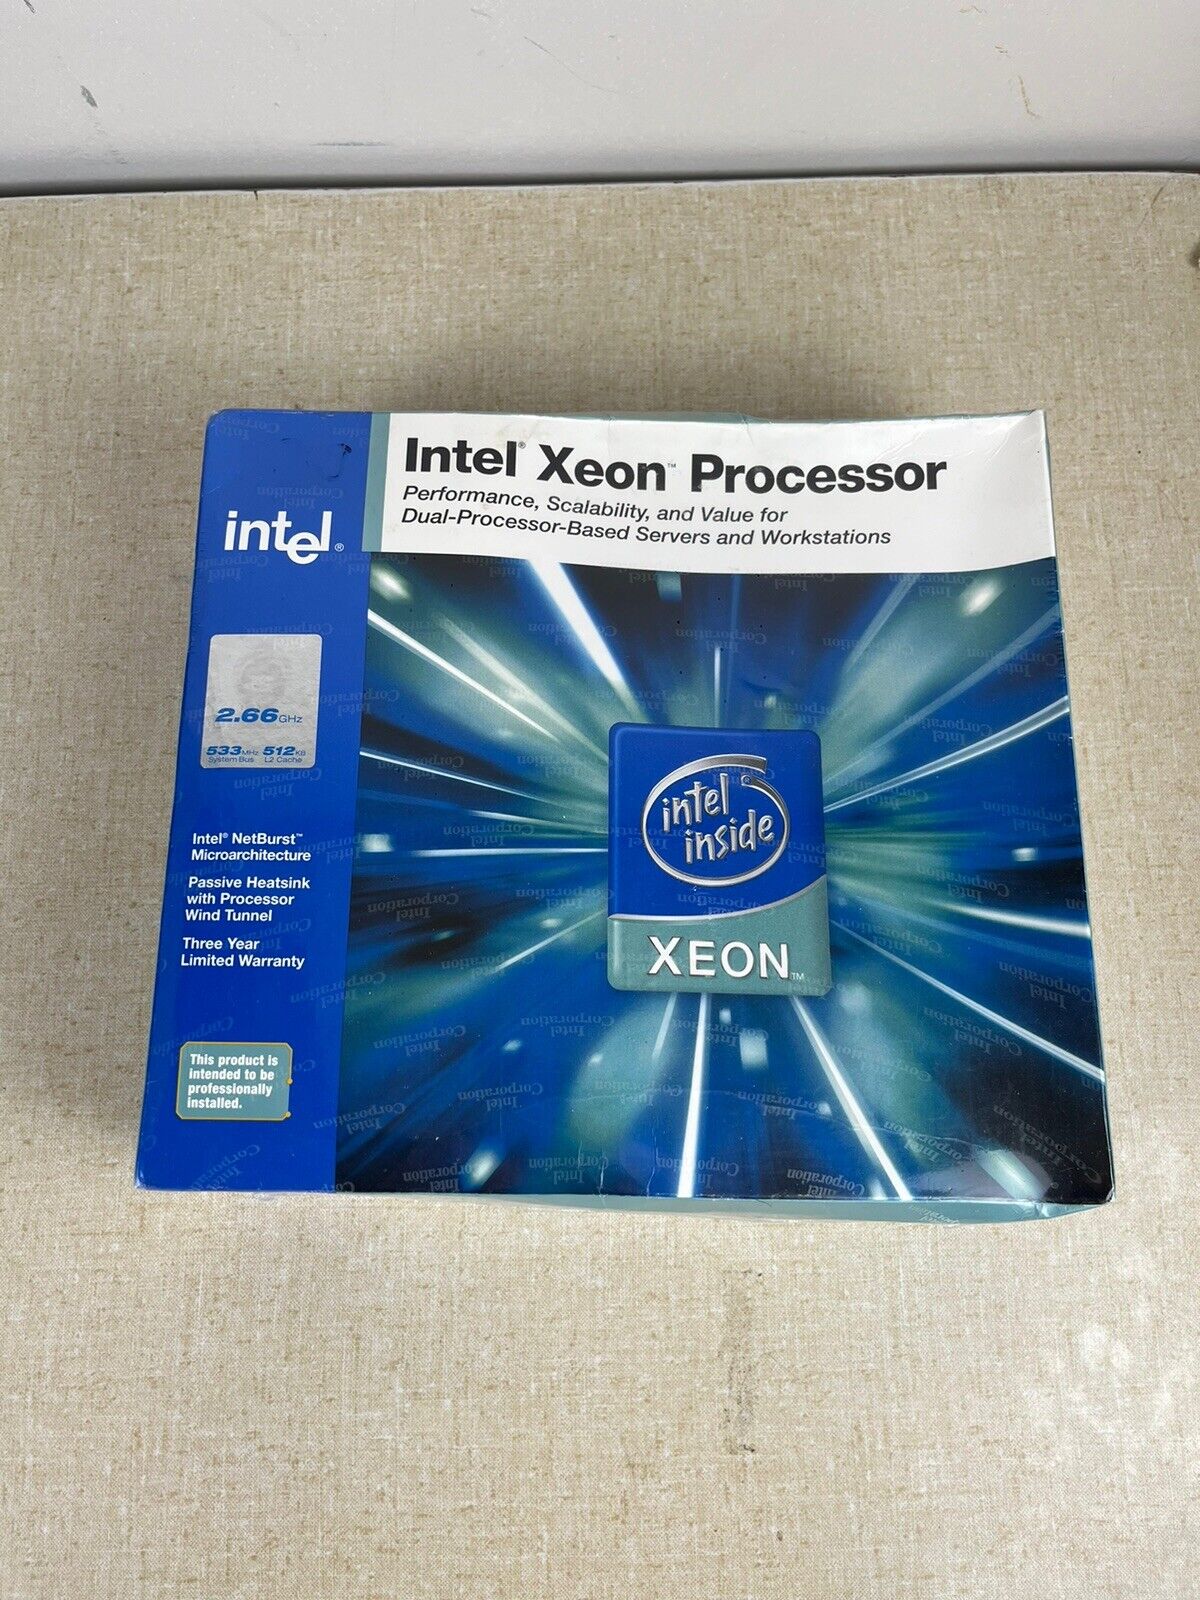 Intel Xeon Processor 2.66 Ghz 533 mhz 512kb L2 Cache